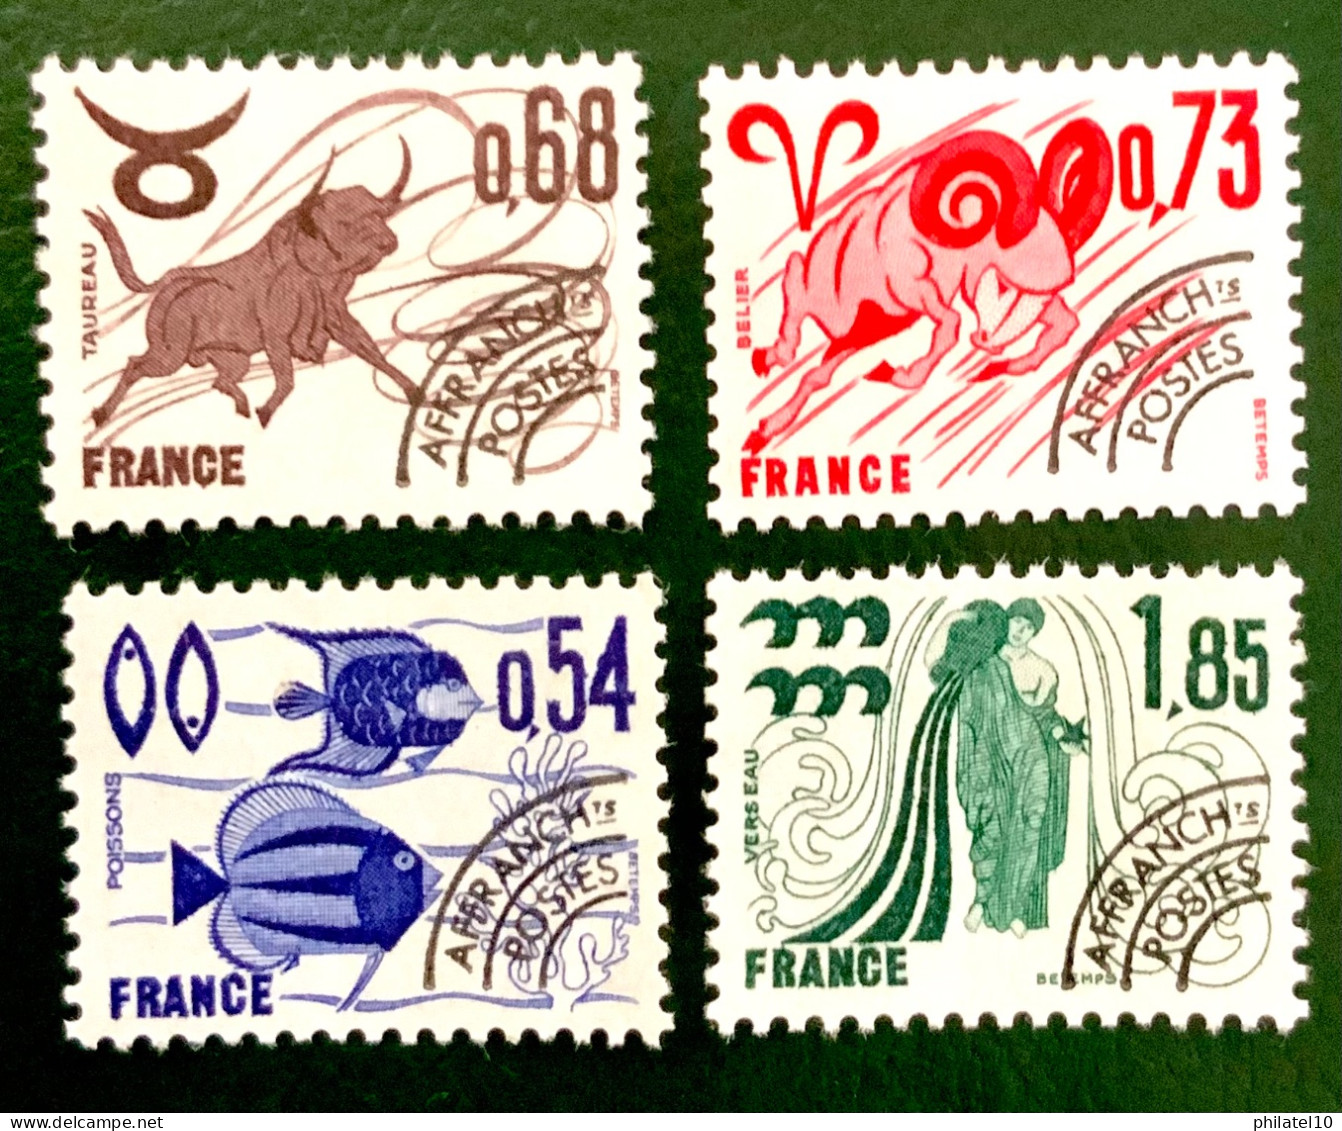 1977 / 78 FRANCE PREOBLITERE SIGNES DU ZODIAQUE - NEUF** - 1964-1988